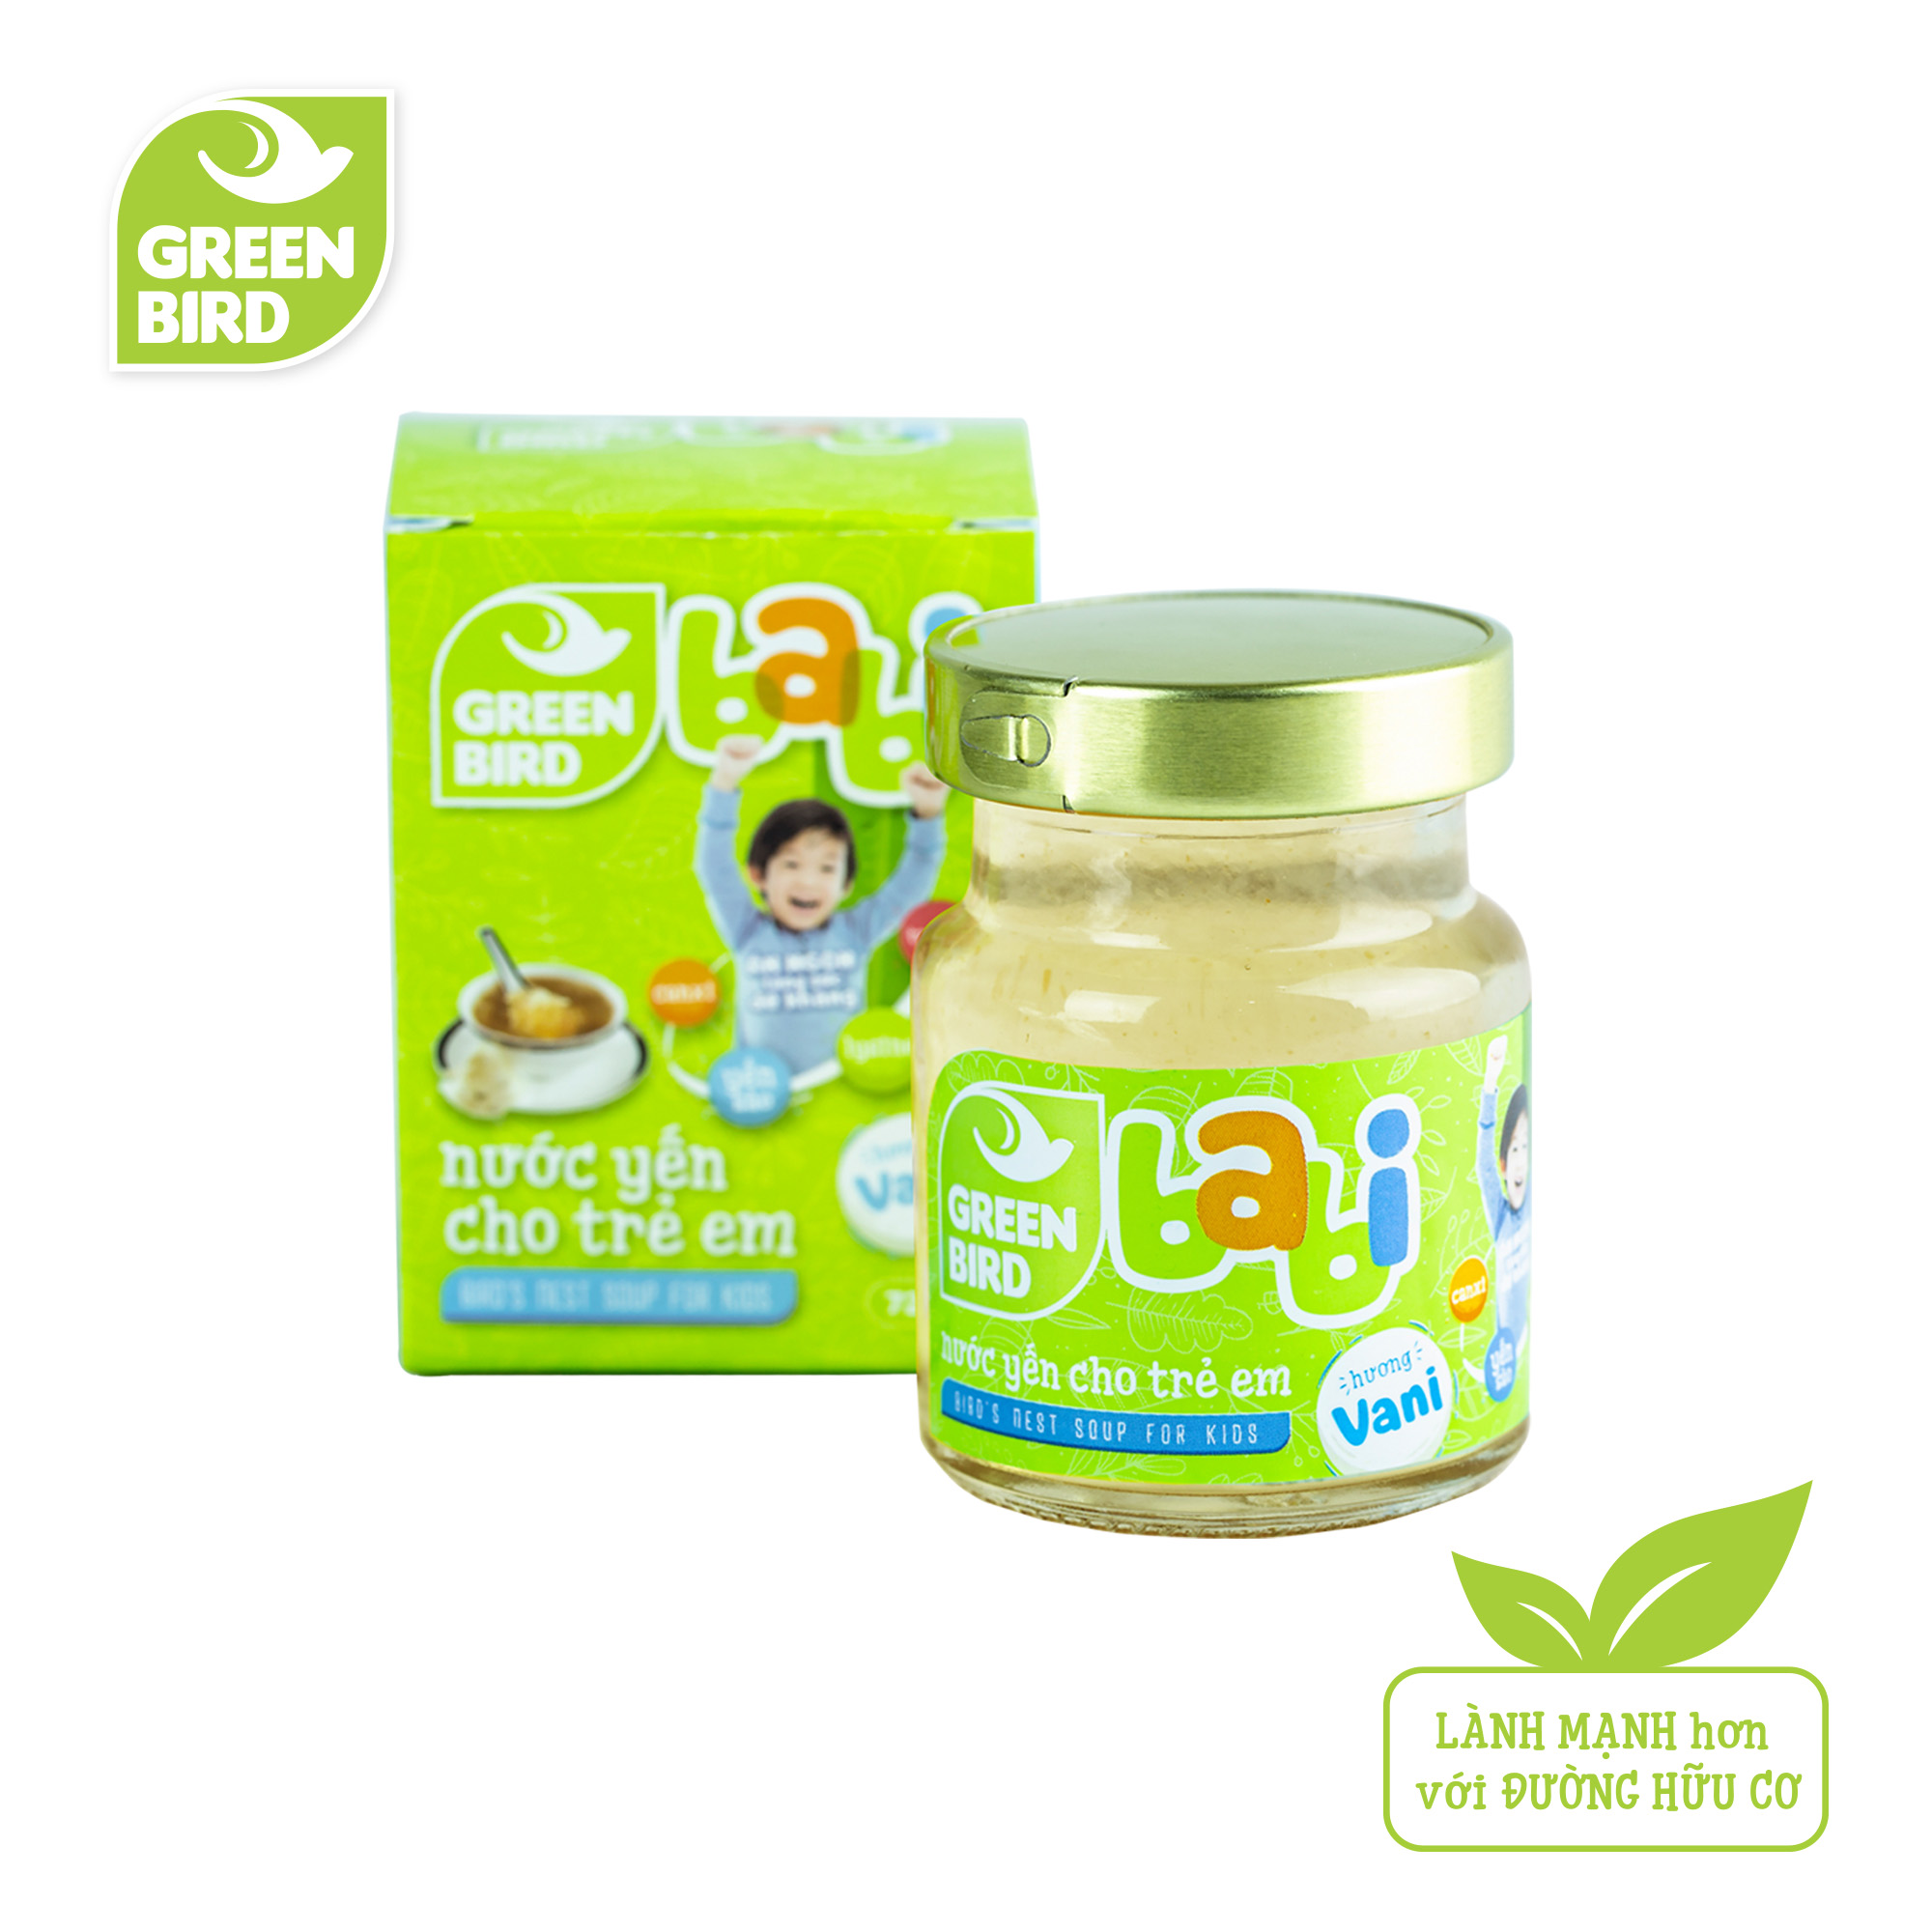  Green Bird - Bird’s nest soup for kids (Vanilla flavor) - jars 72g 